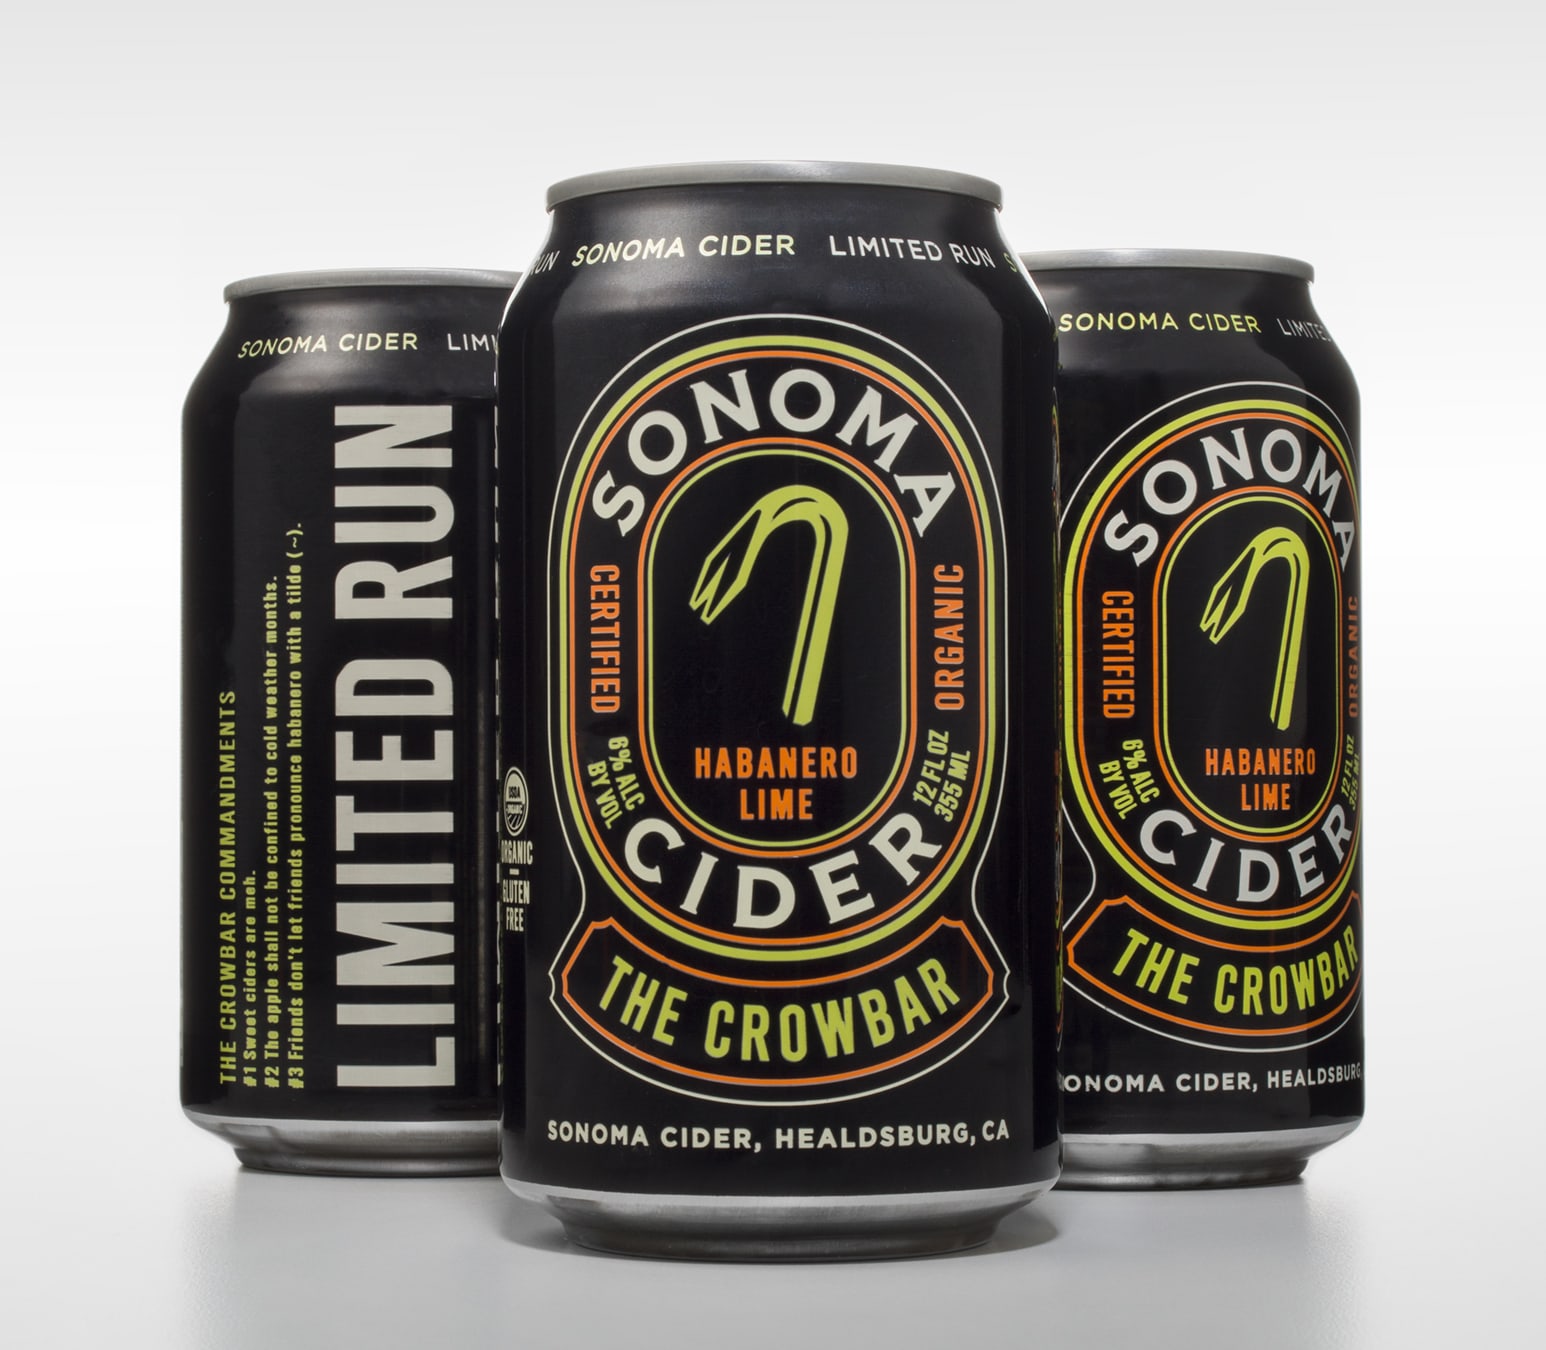 Sonoma Cider package design cans